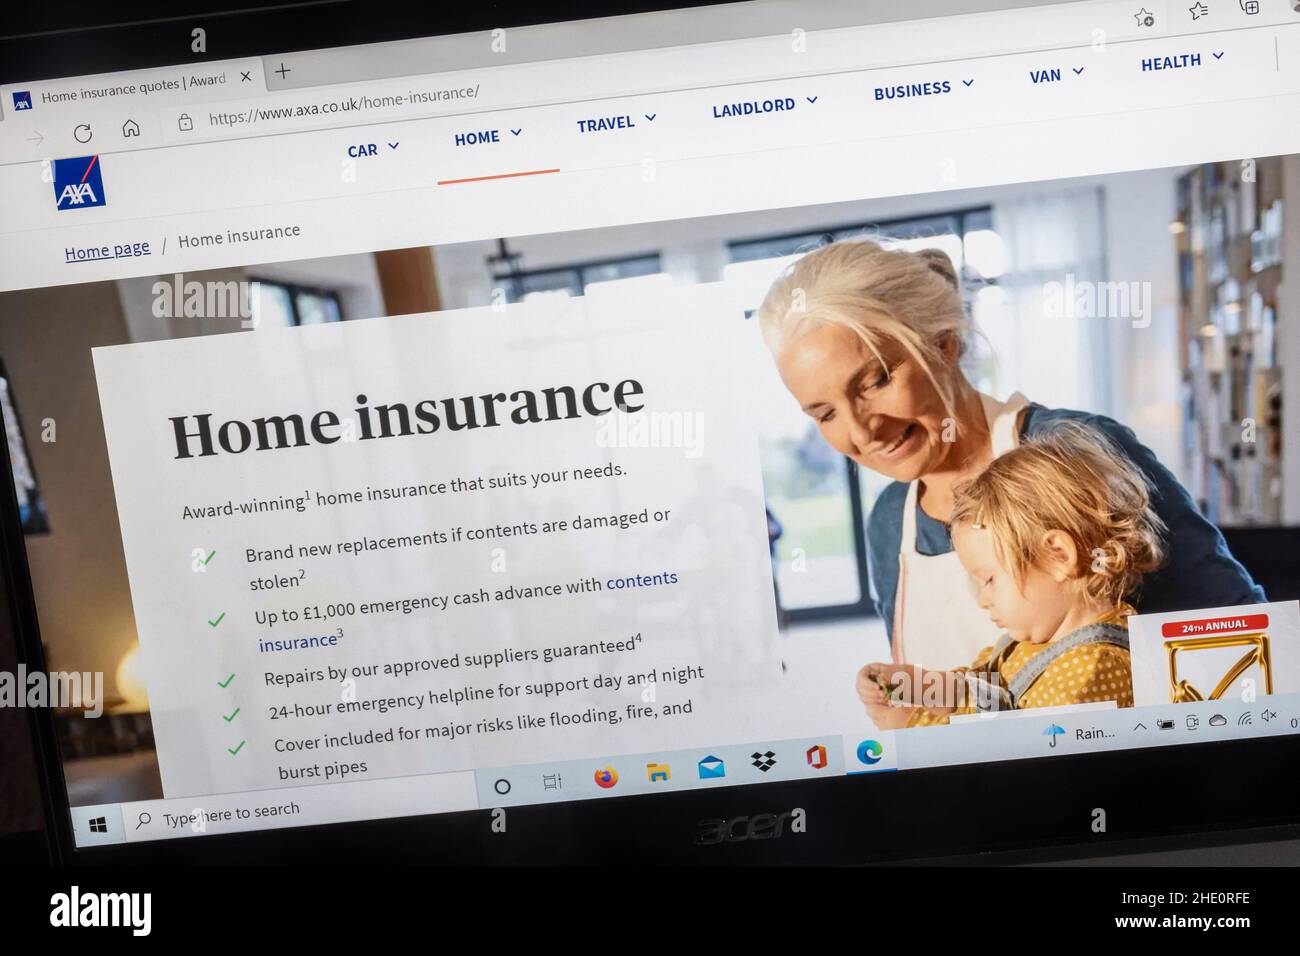 Axa Insurance Company on a laptop computer screen. Home Insurance page. Stock Photo